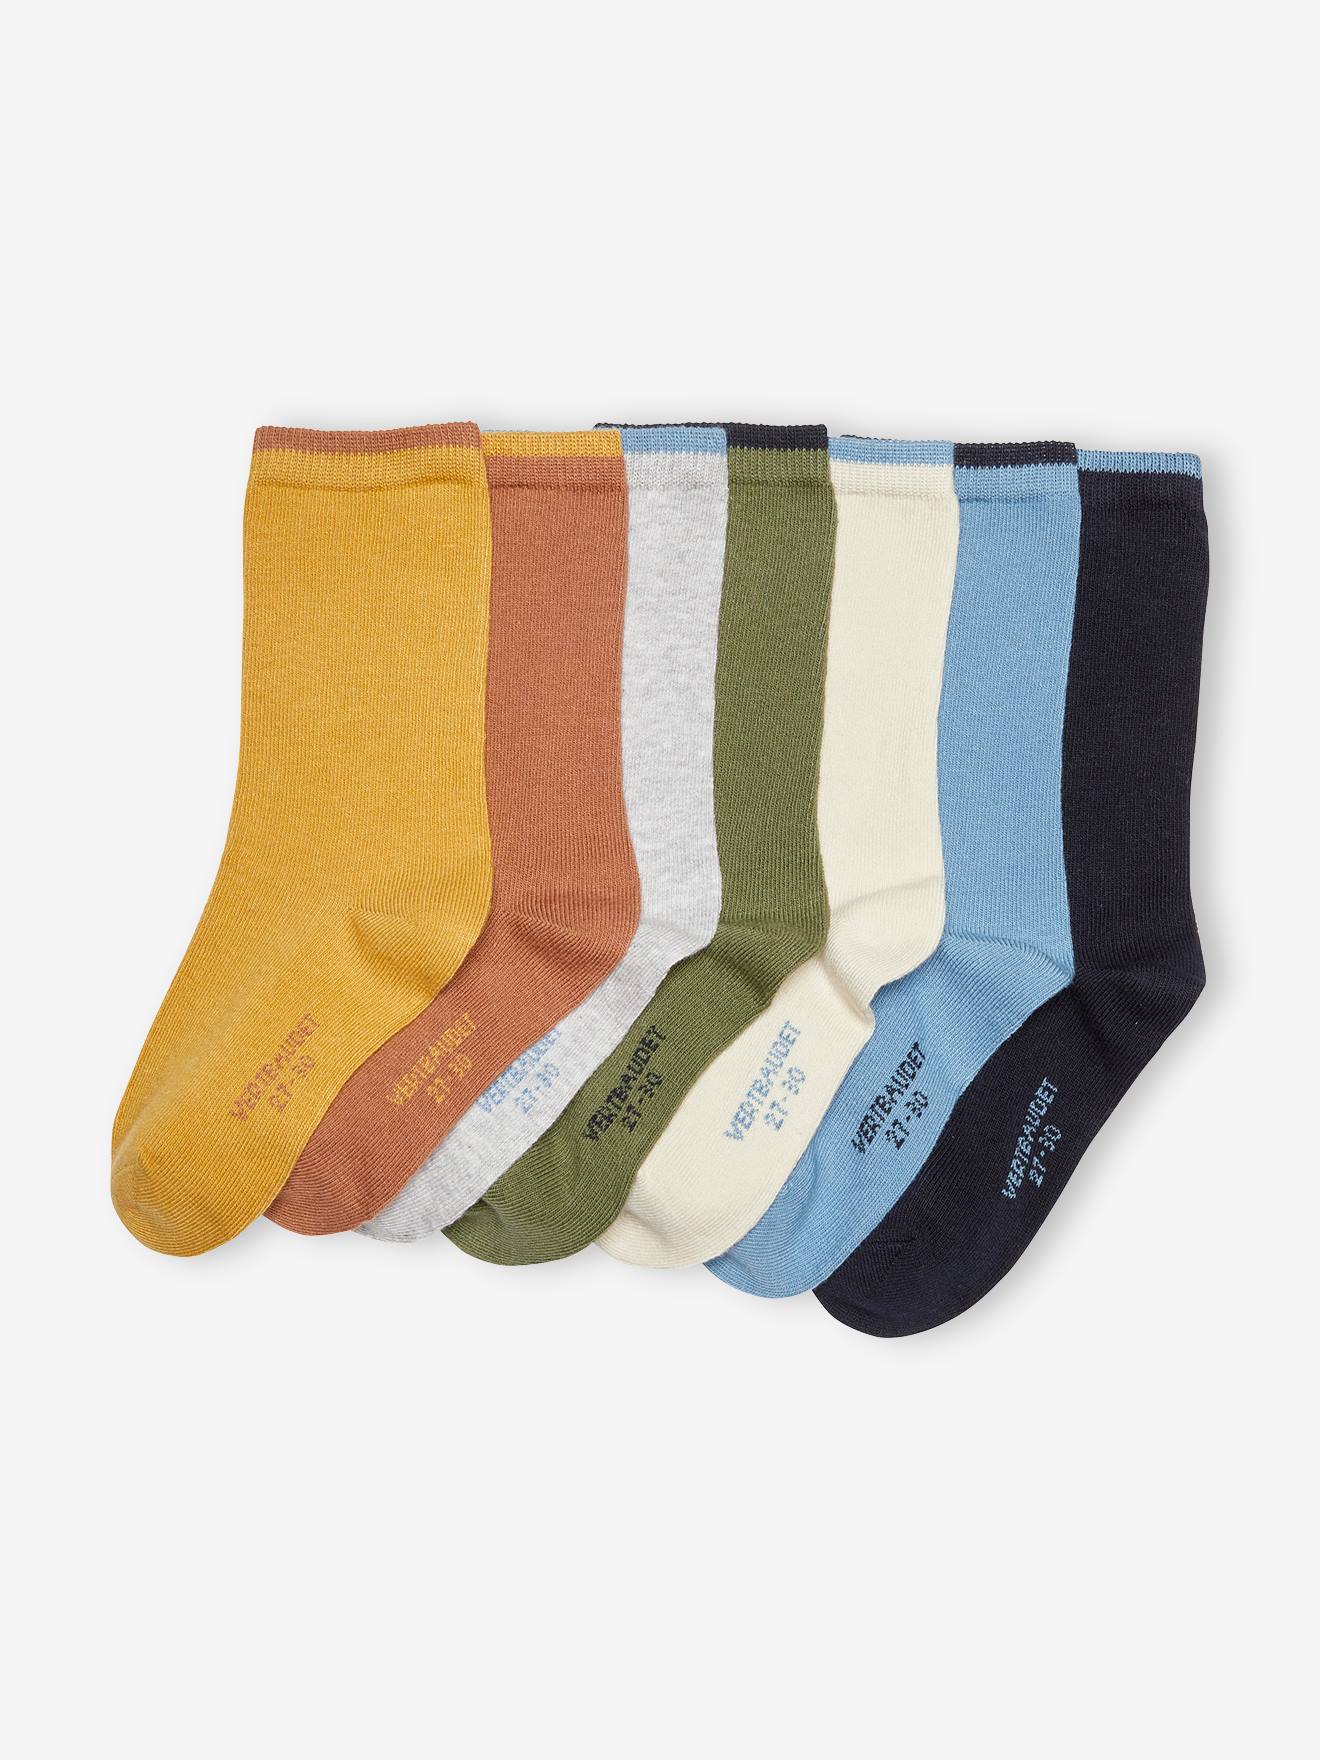 Skisock S Socks Yellow EU 31-34 Boy DressInn Boys Clothing Underwear Socks 